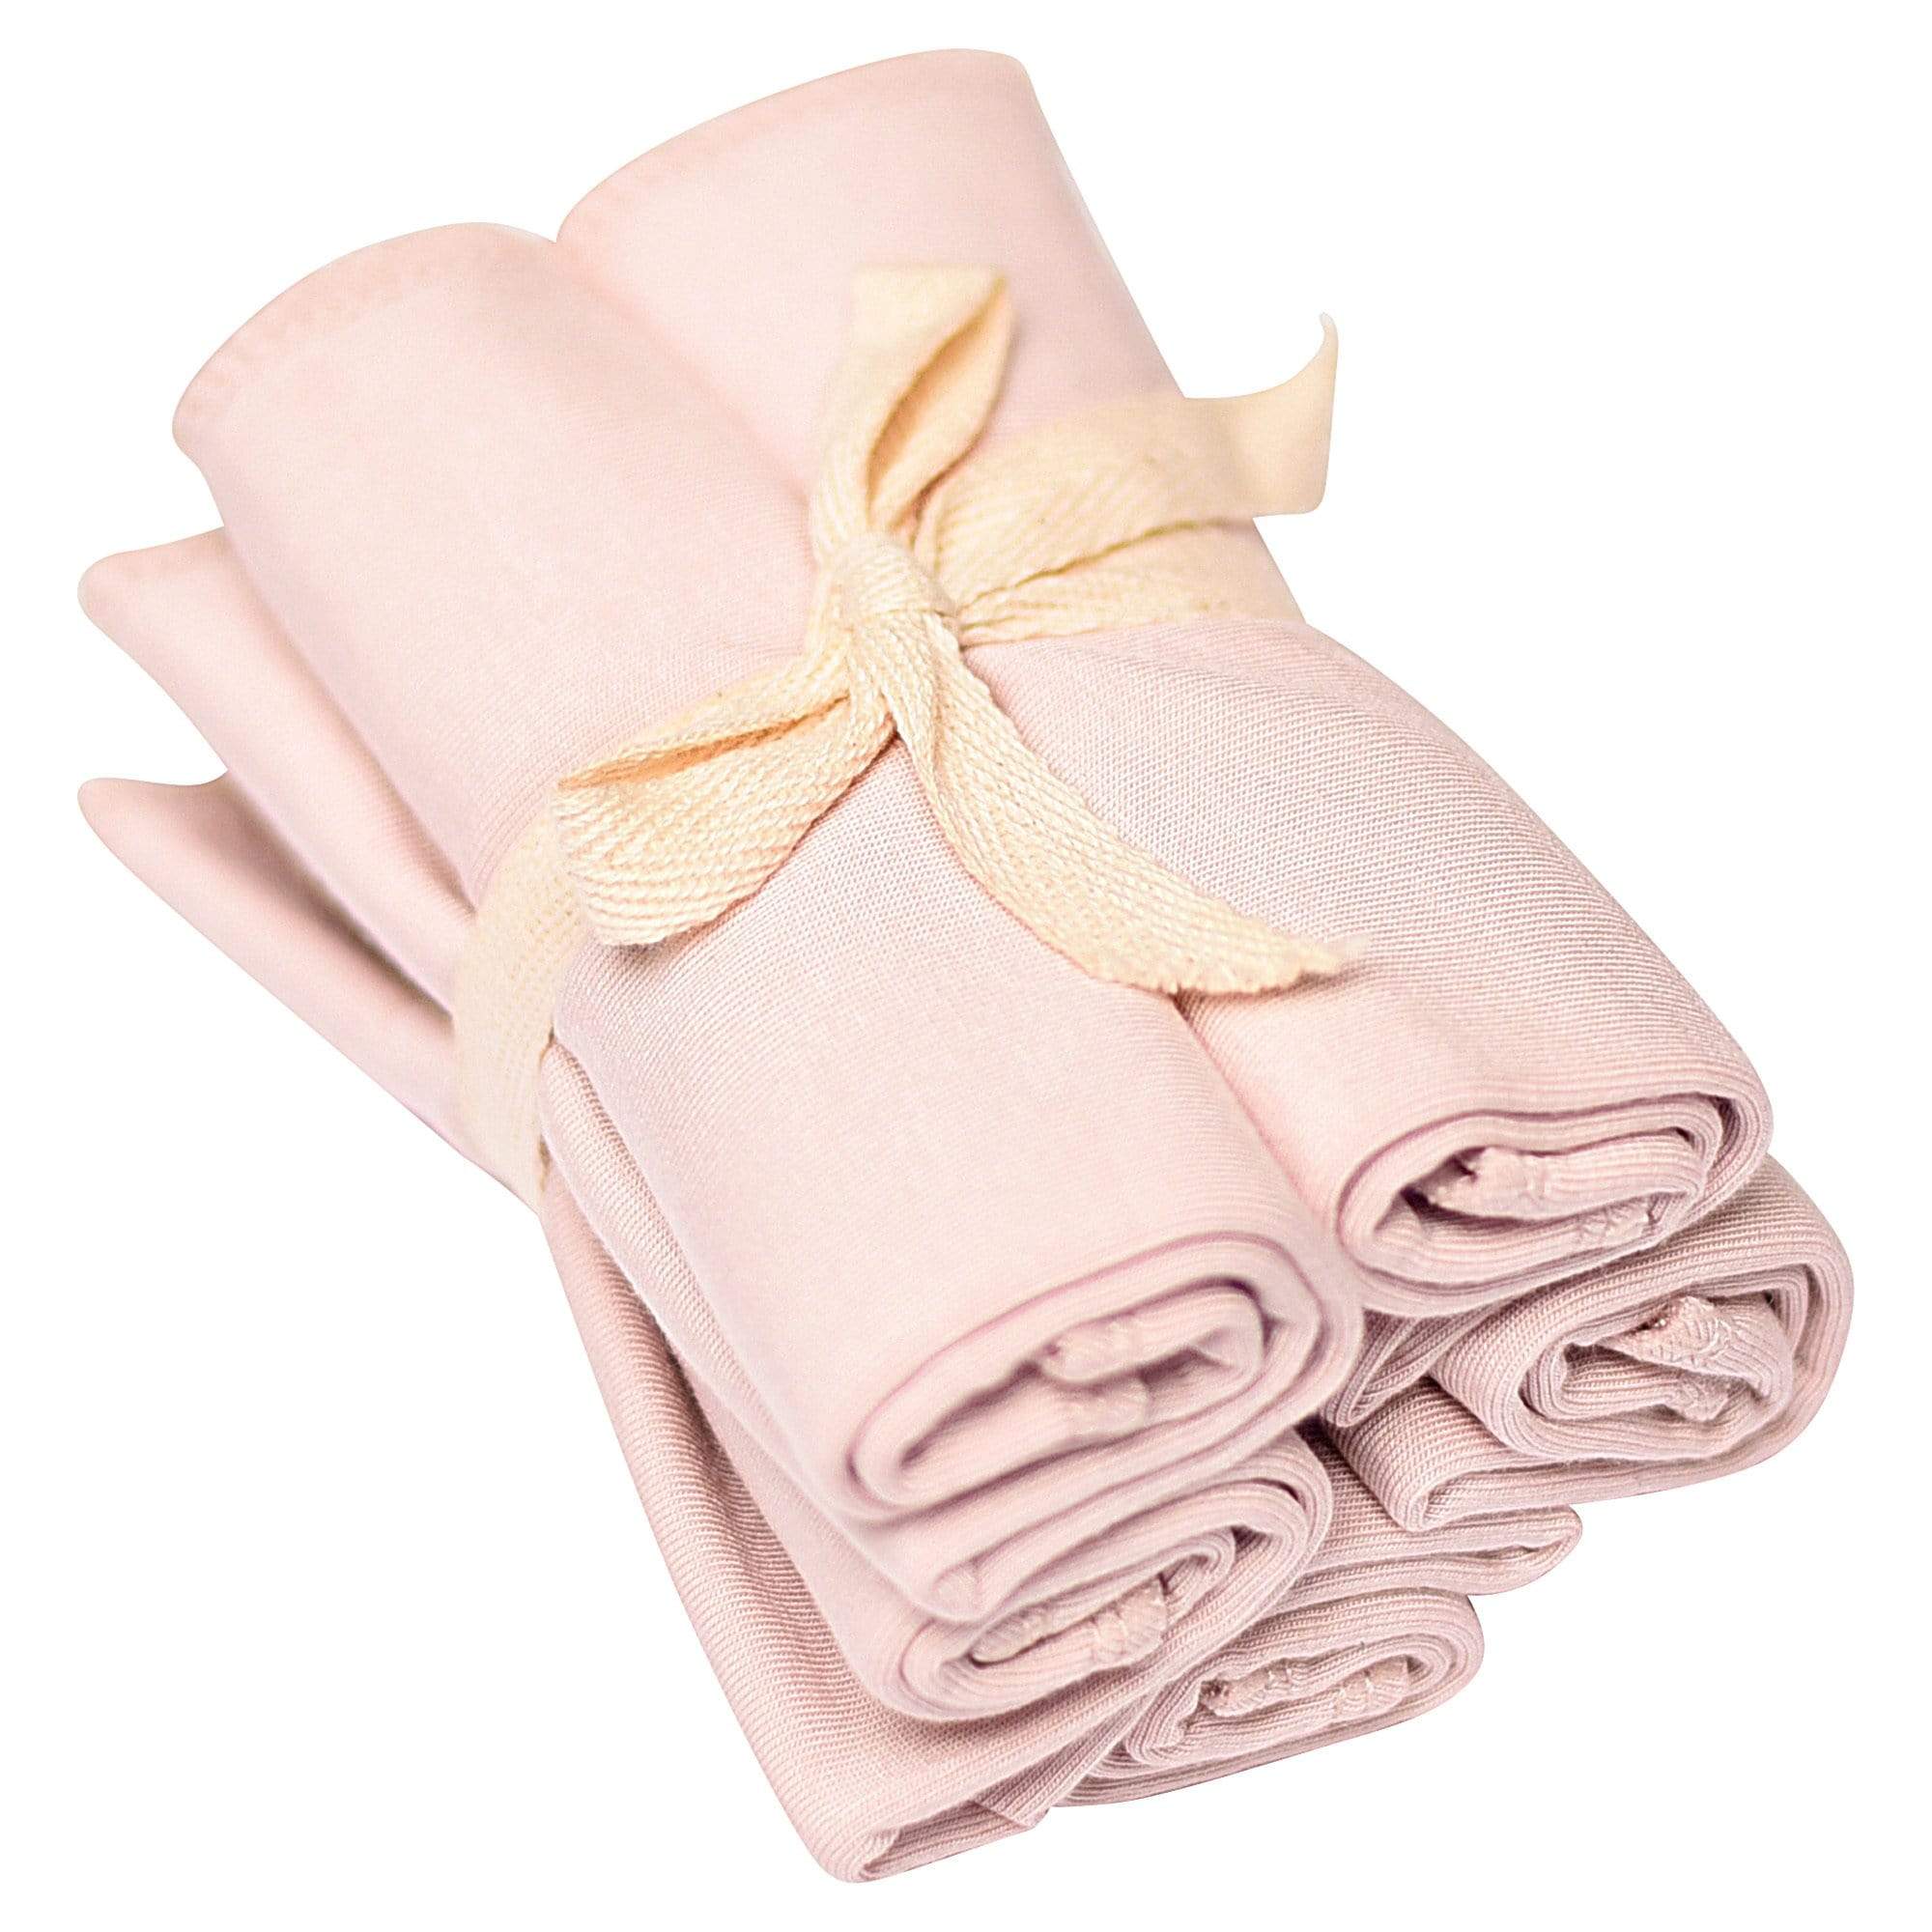 Washcloth 5-Pack in Blush